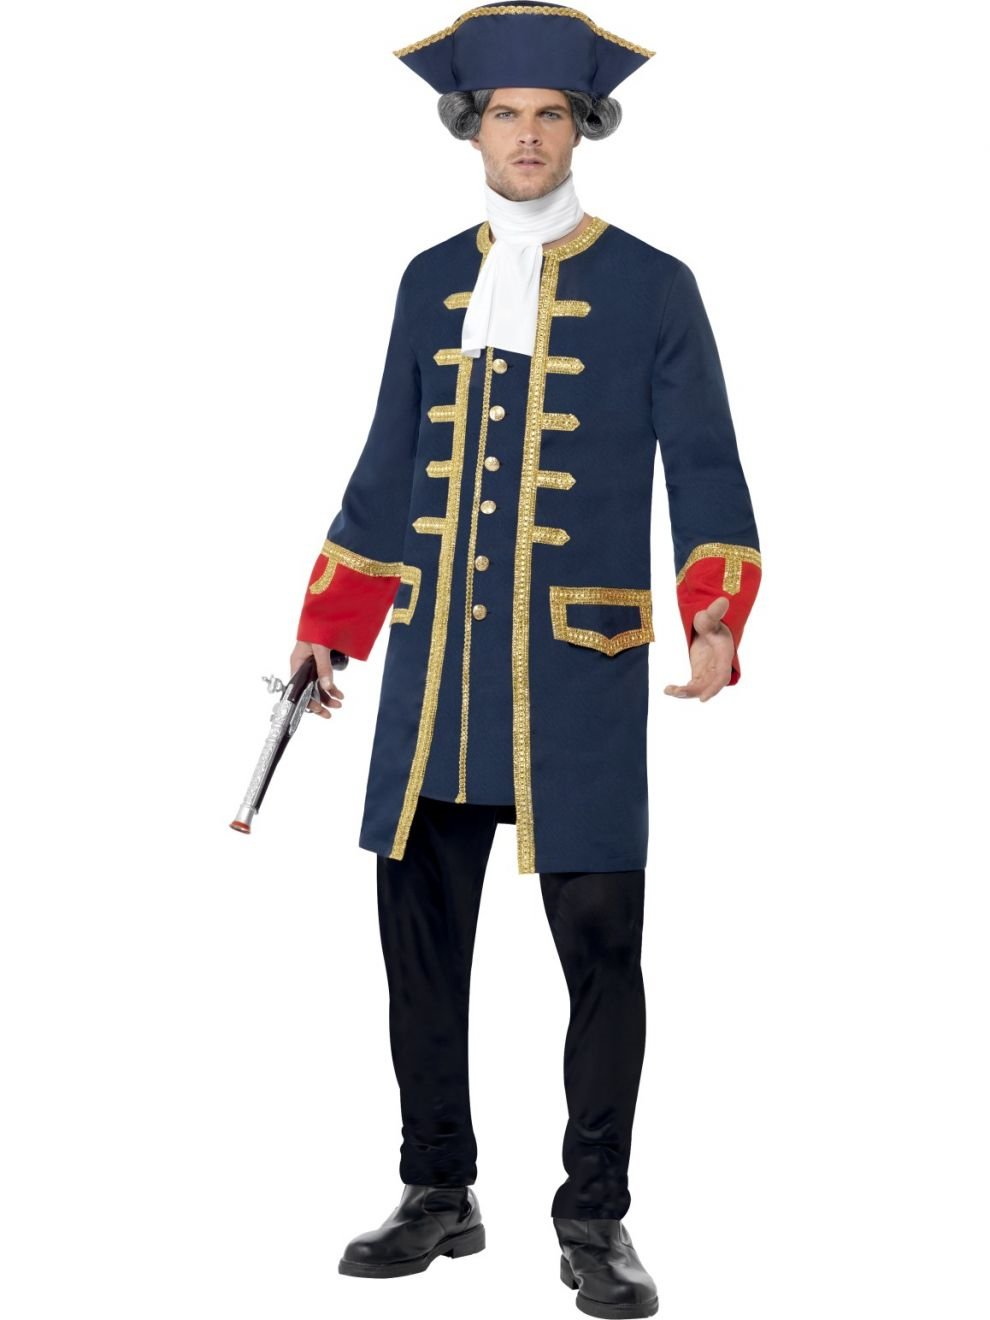 Costume Adult Pirate Commander Blue